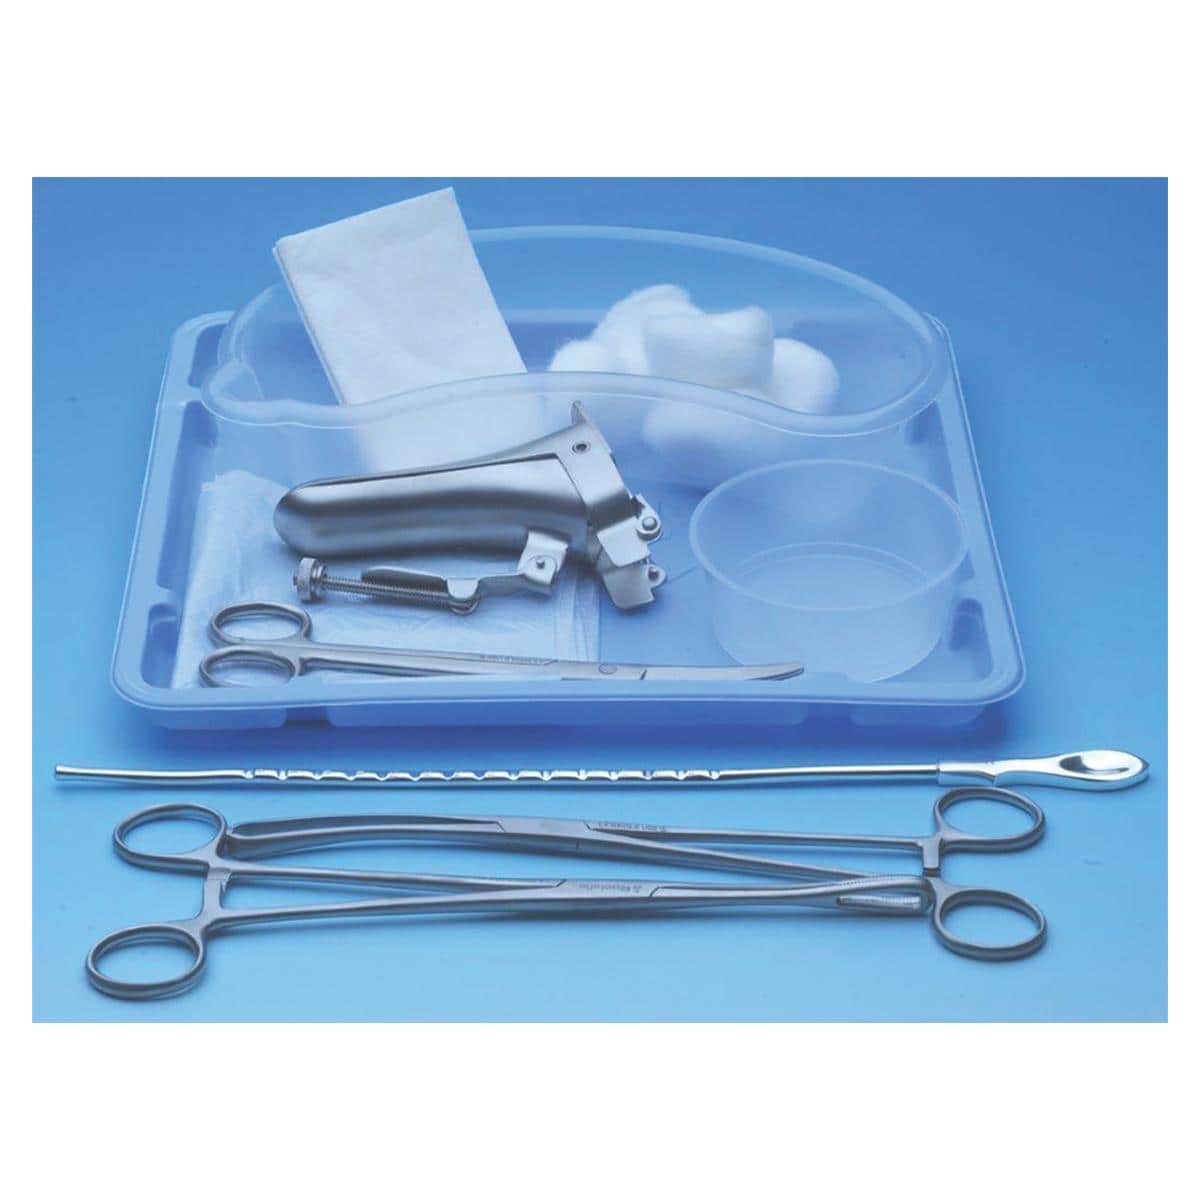 Medical Supplies & Surgical Instruments - Henry Schein Medical